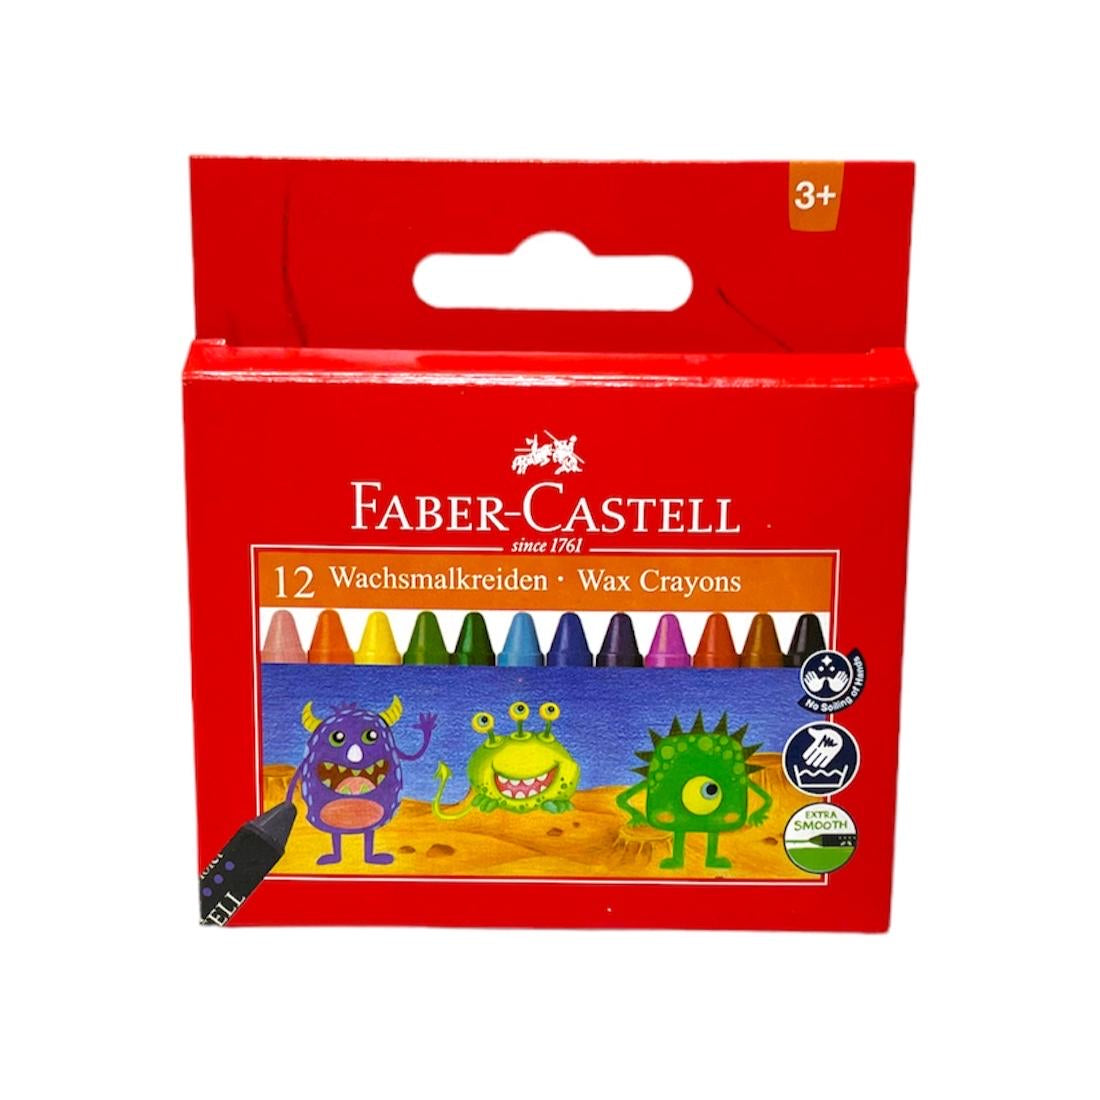 Faber Castell Wax Crayons 12 Colors || الوان شمعية فيبر كاستل ١٢ لون 